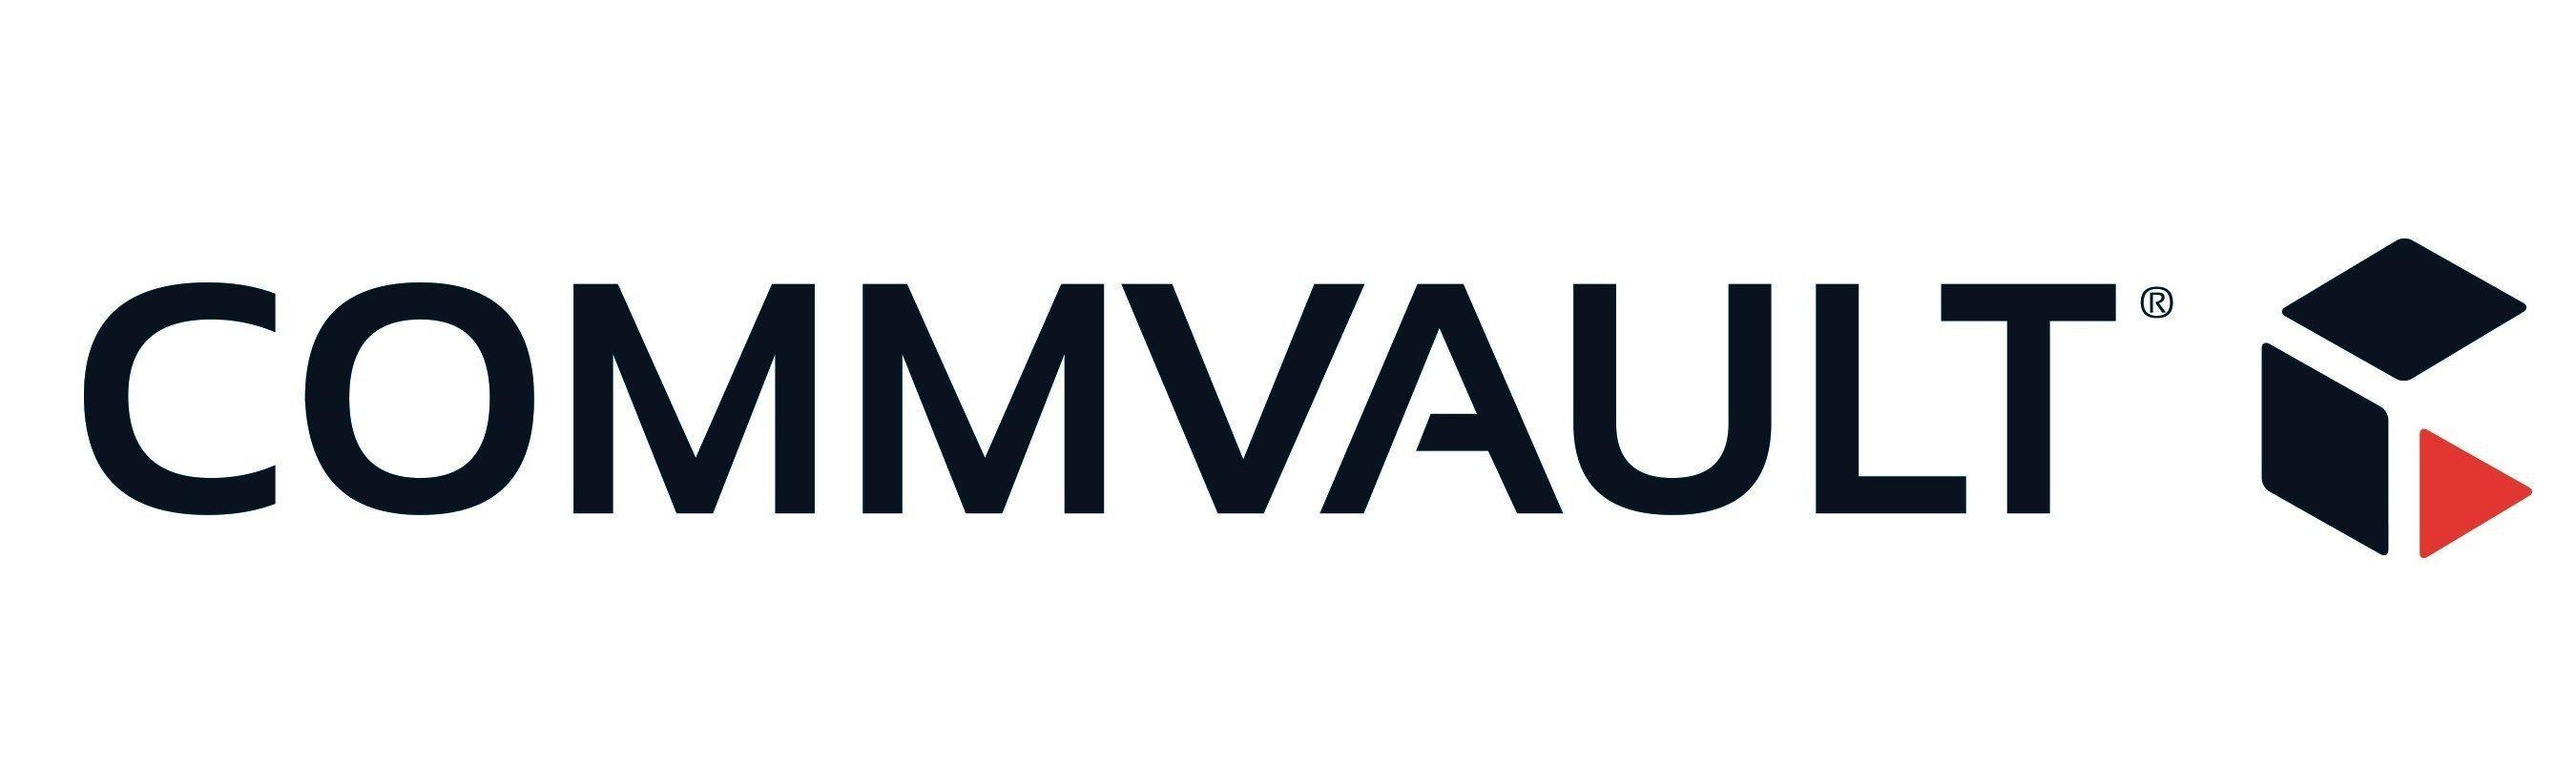 CommVault Logo - Commvault new Logo. Strategic Information Networking Conferences